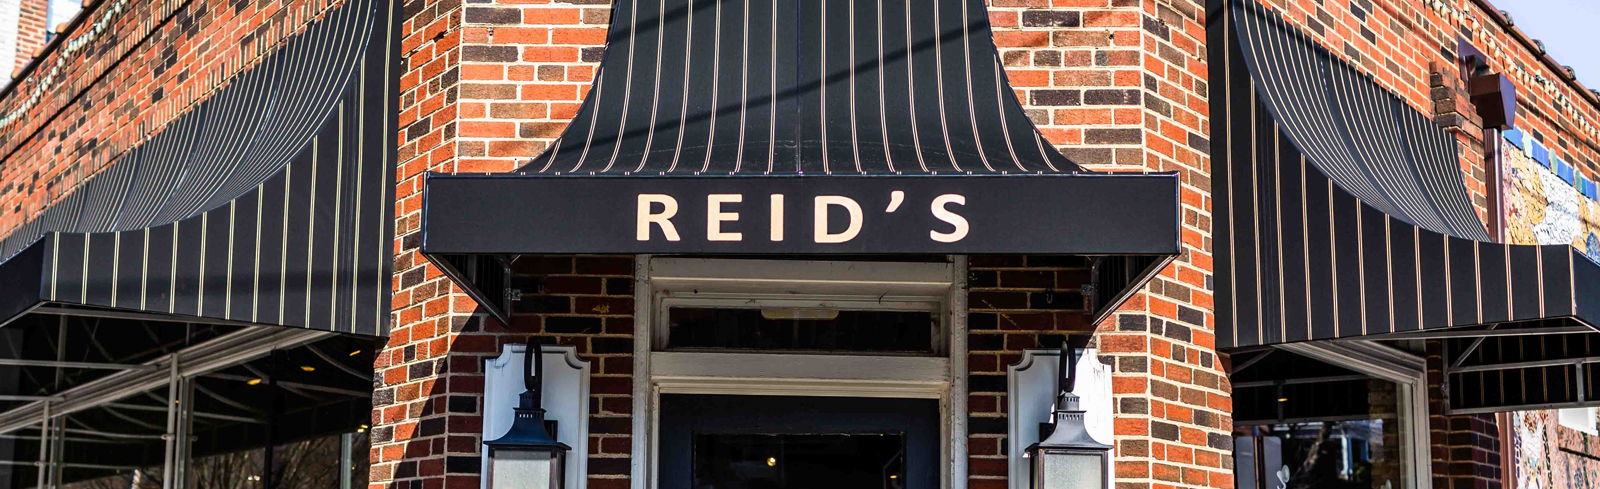 Reid's Fine Furnishings Roanoke Showroom storefront